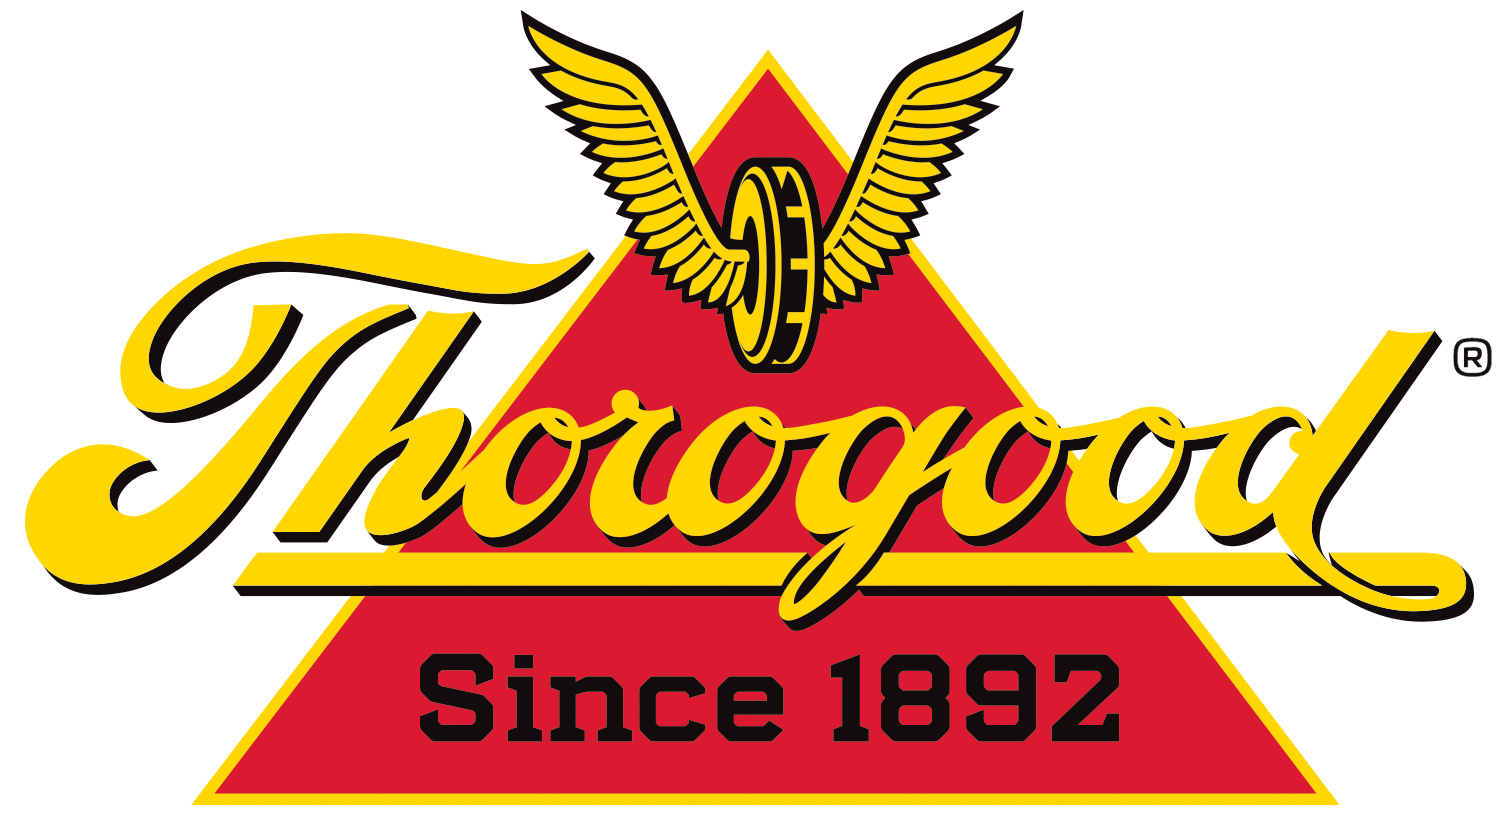 
						Thorogood
					